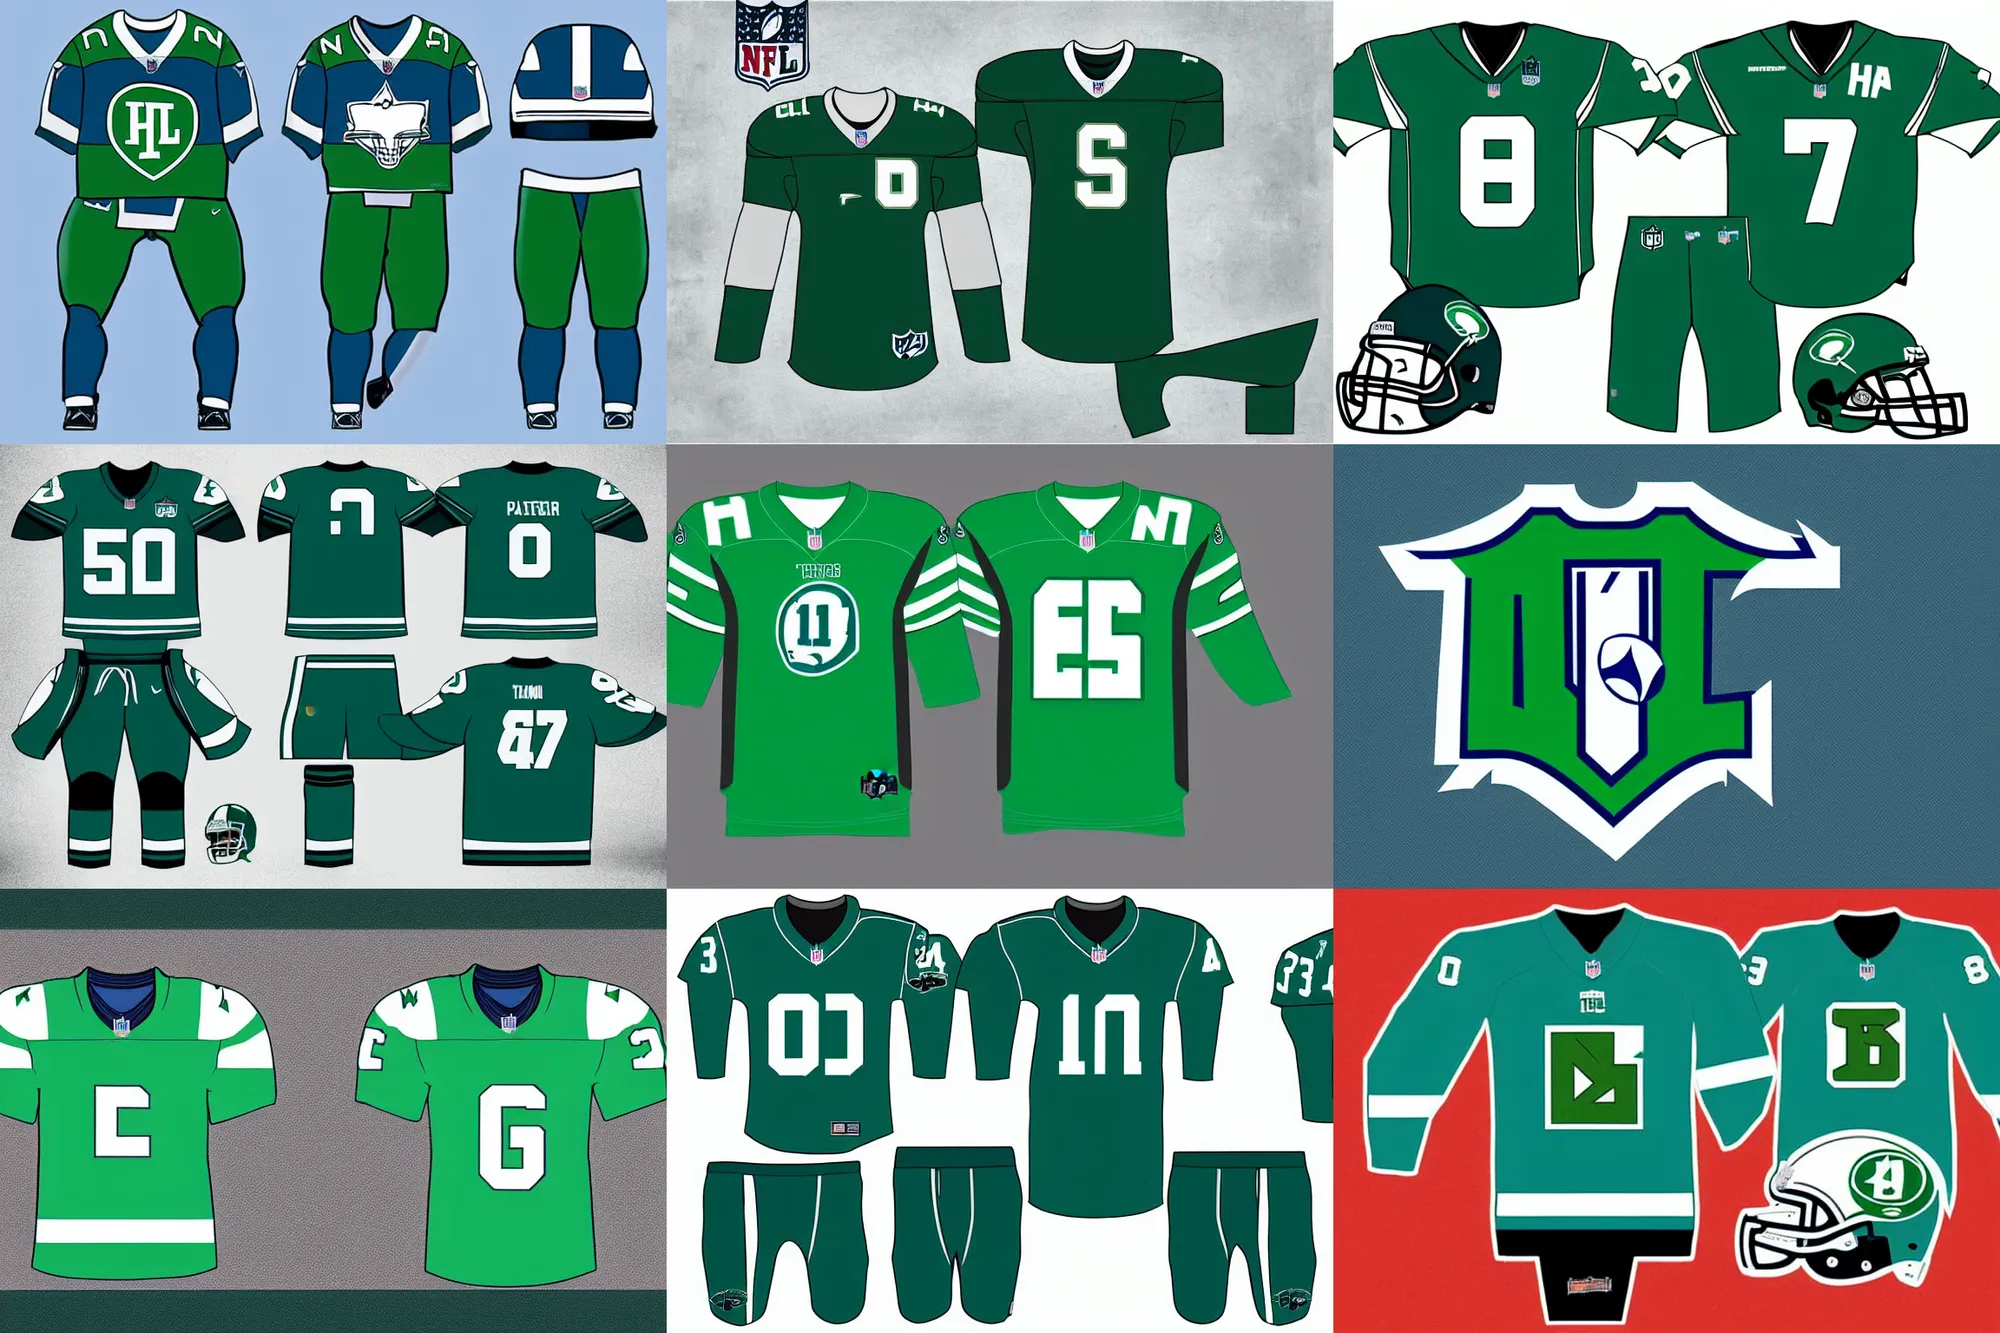 Prompt: nfl team design for the hartford whalers, green and blue color scheme, template sheet, jersey, pants, helmet